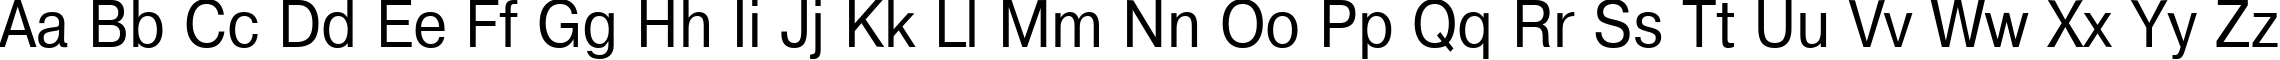 Пример написания английского алфавита шрифтом PragmaticaCTT90n